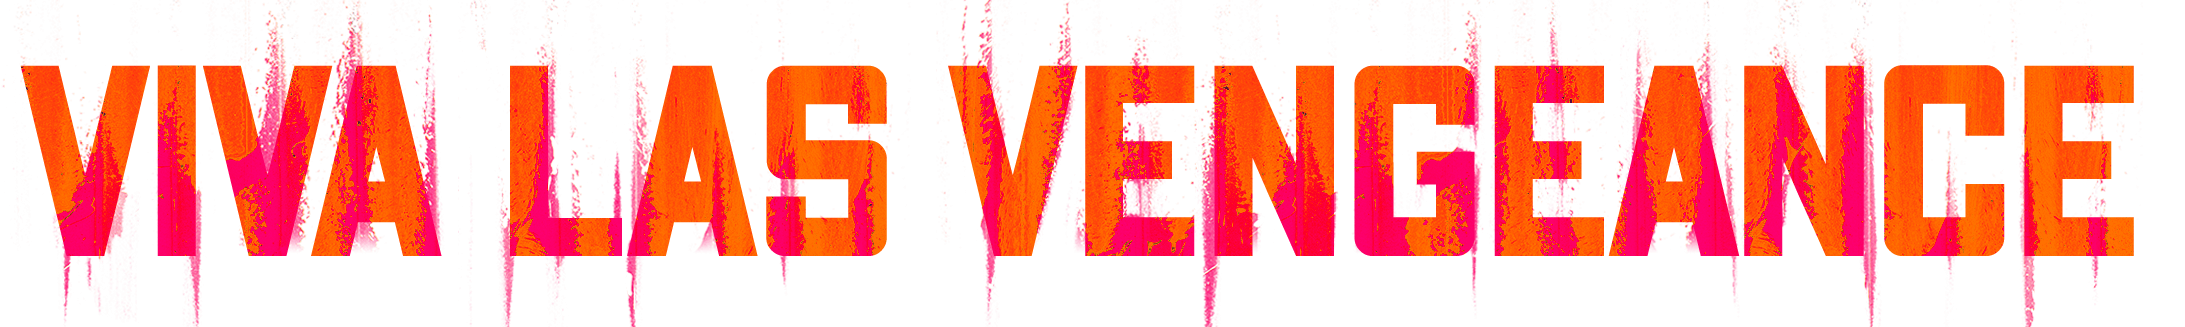 Army of the Dead - Viva Las Vengeance: A VR Experience - Los Angeles Logo